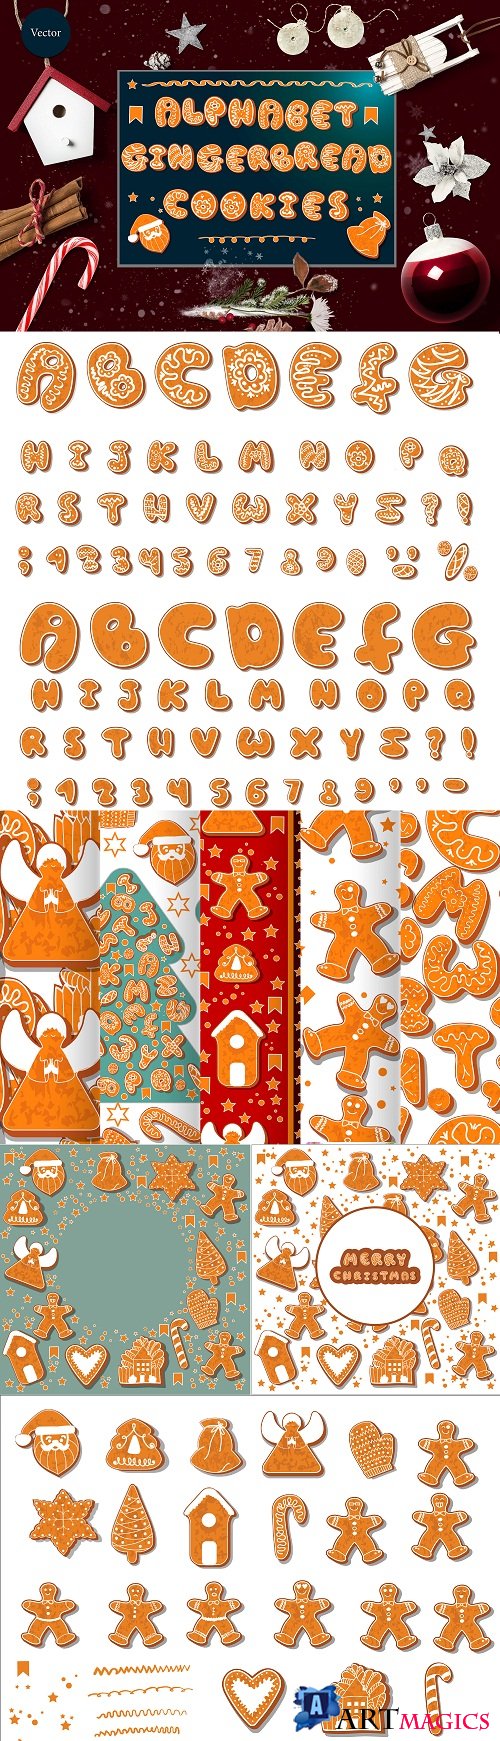 Vector set of 2 gingerbread alphabets. Christmas symbols - 173652